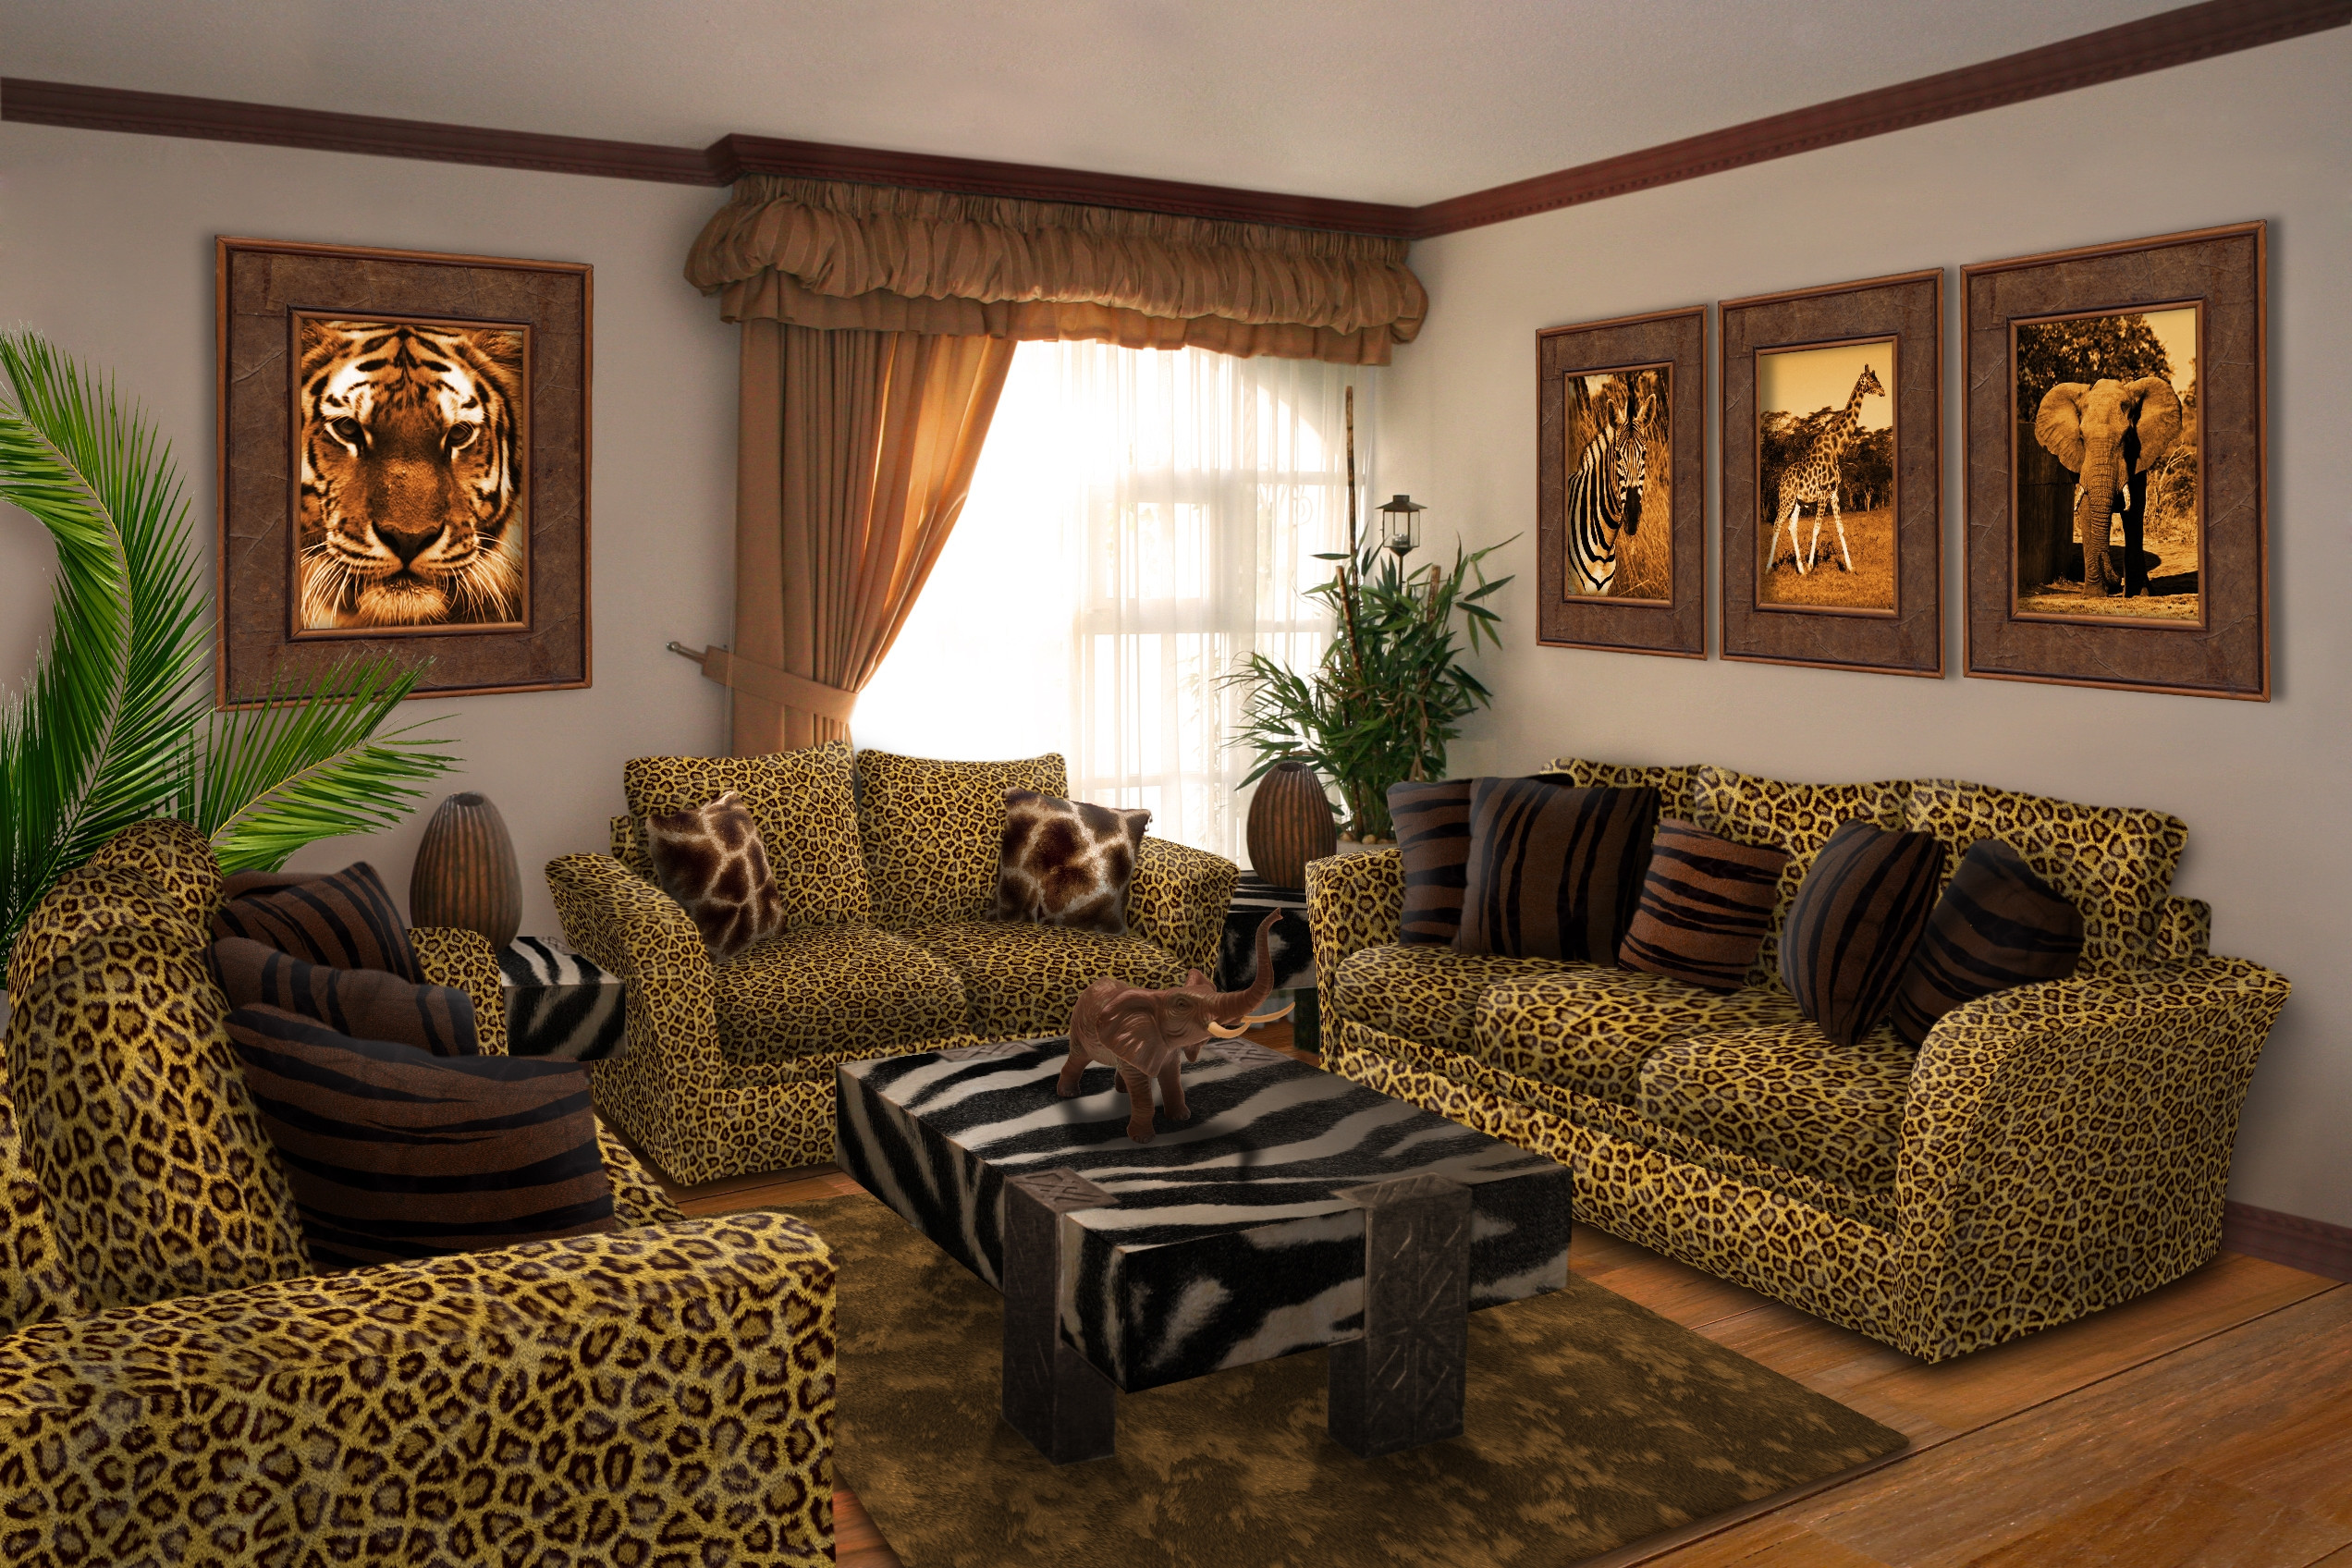 Safari Decor For Living Room
 Safari Themed Living Room Decor